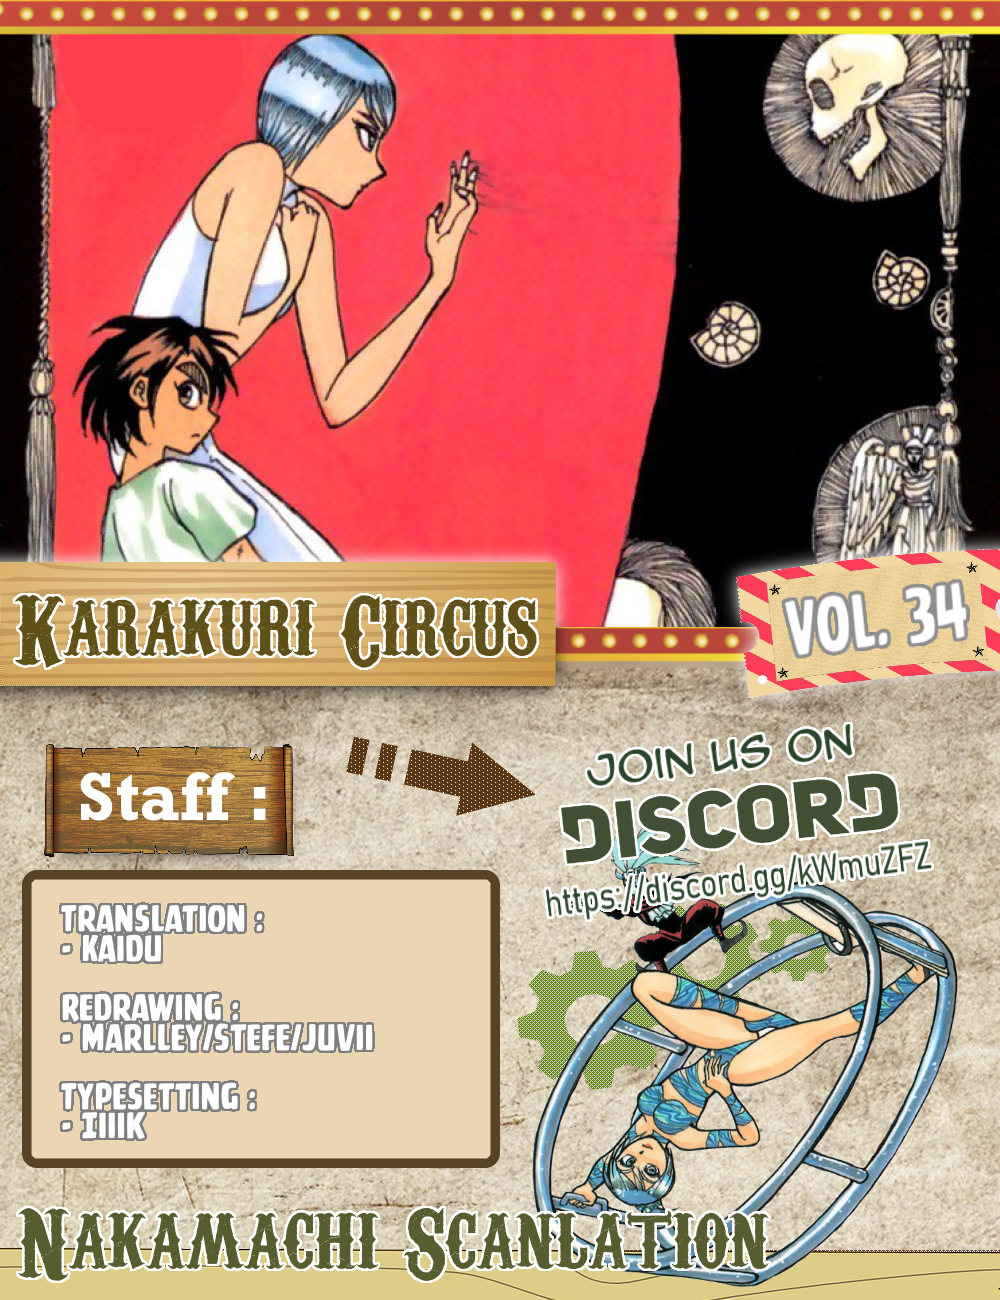 Karakuri Circus Chapter 329: Main Part - Summer At Kuroga Village - Act 11: Into The Ring - Picture 1